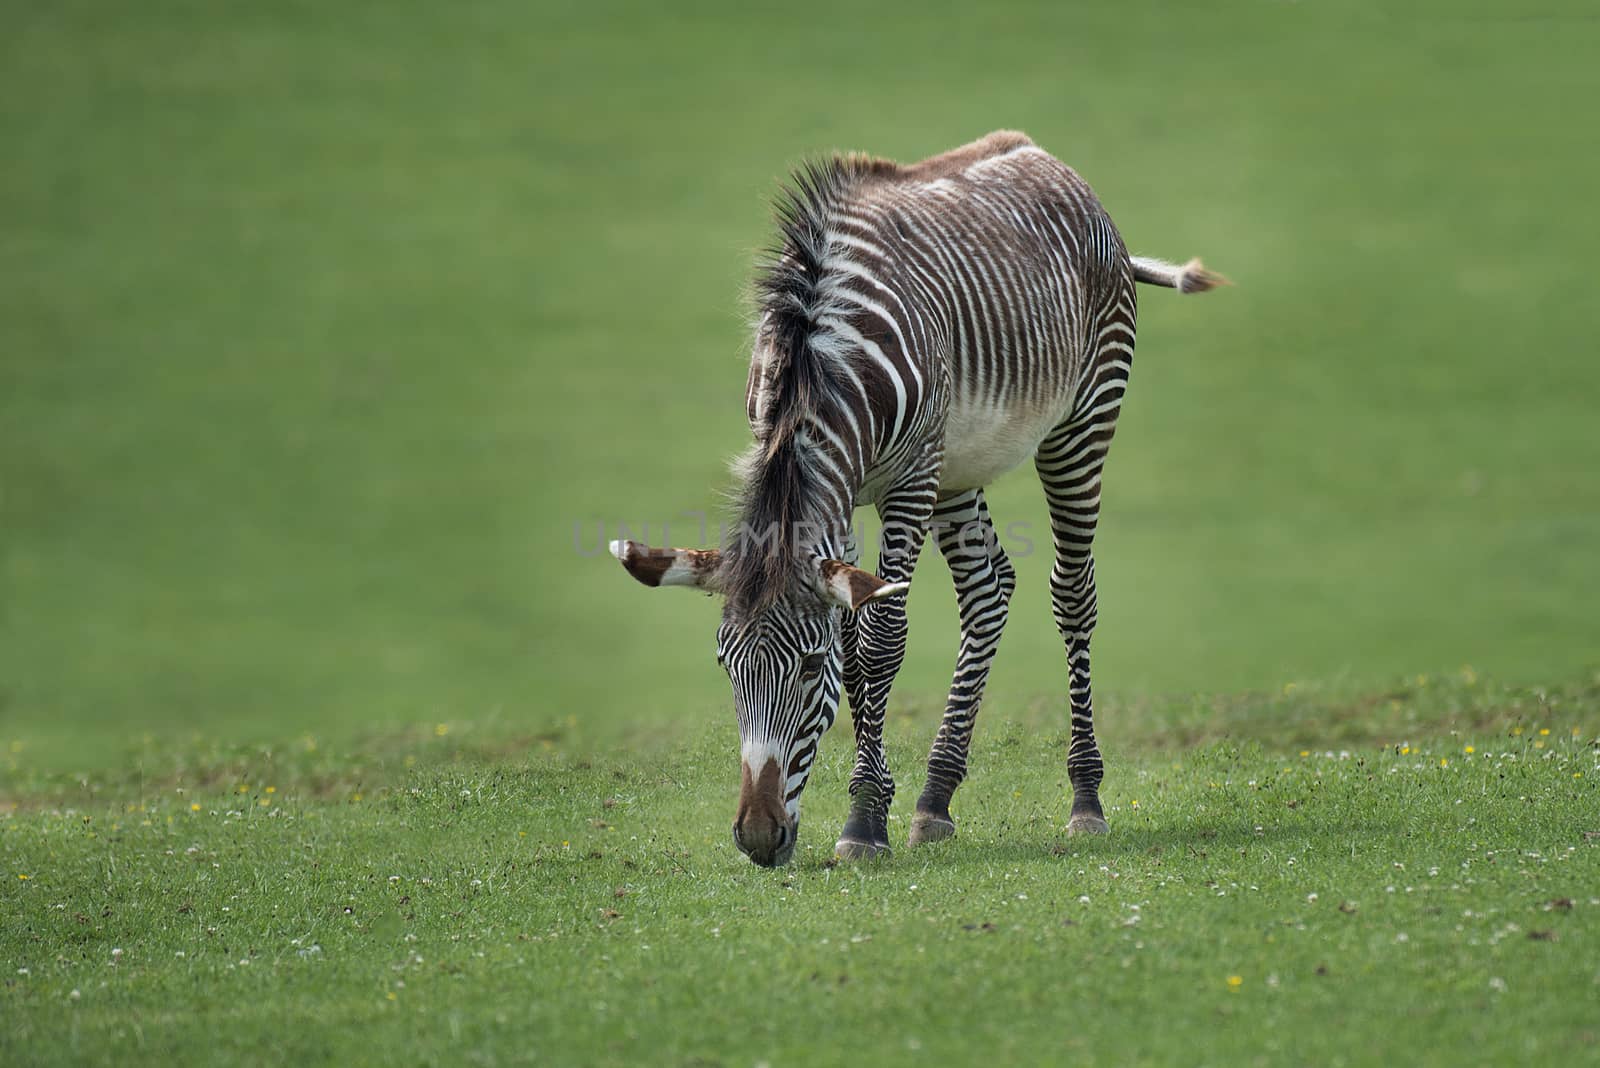 Zebra grazing by alan_tunnicliffe